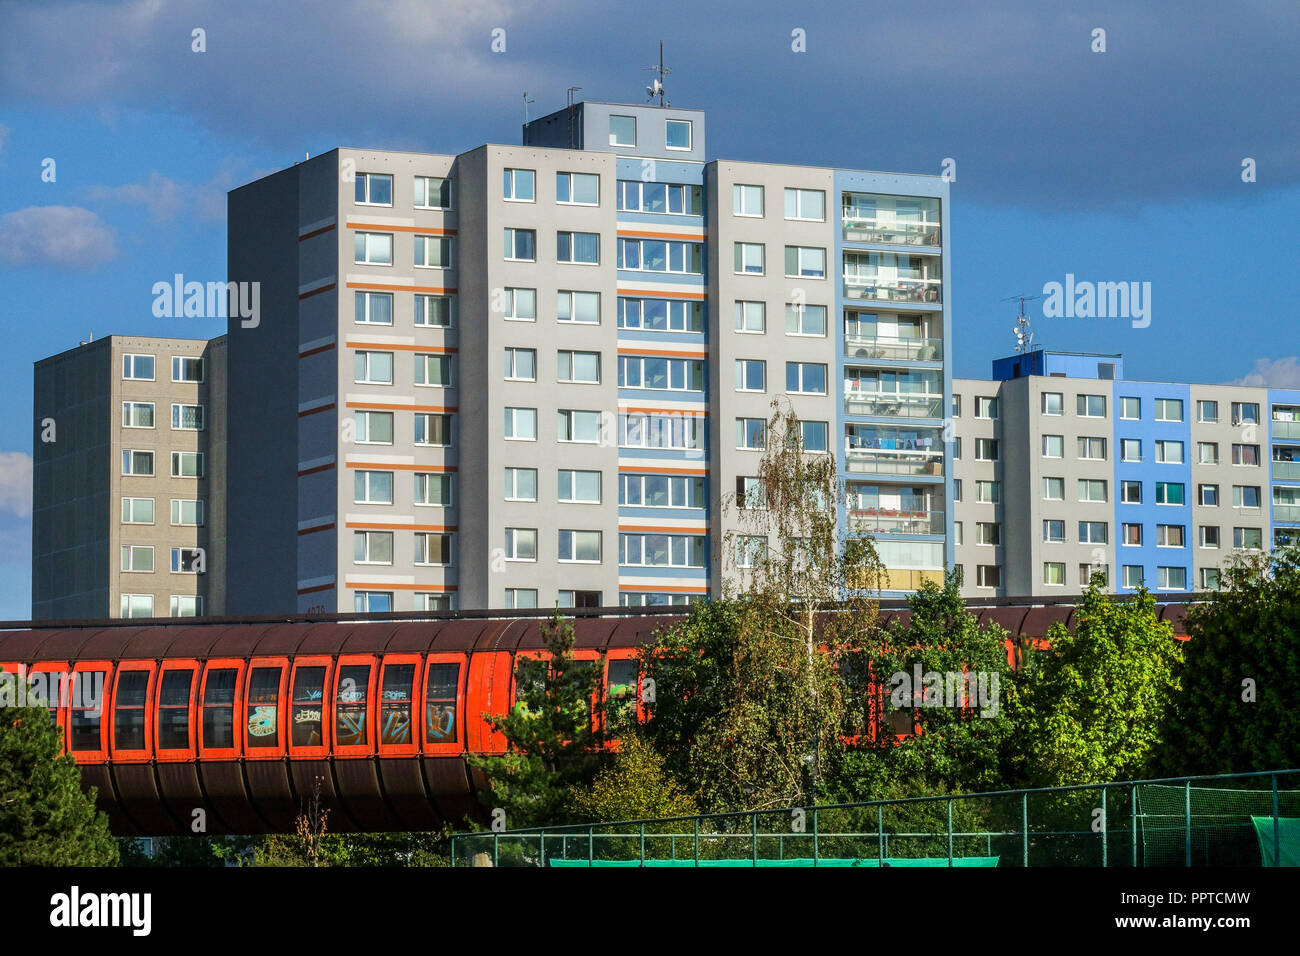 The Luziny housing estate, Prague Stodulky, Czech Republic sidliste Stock Photo